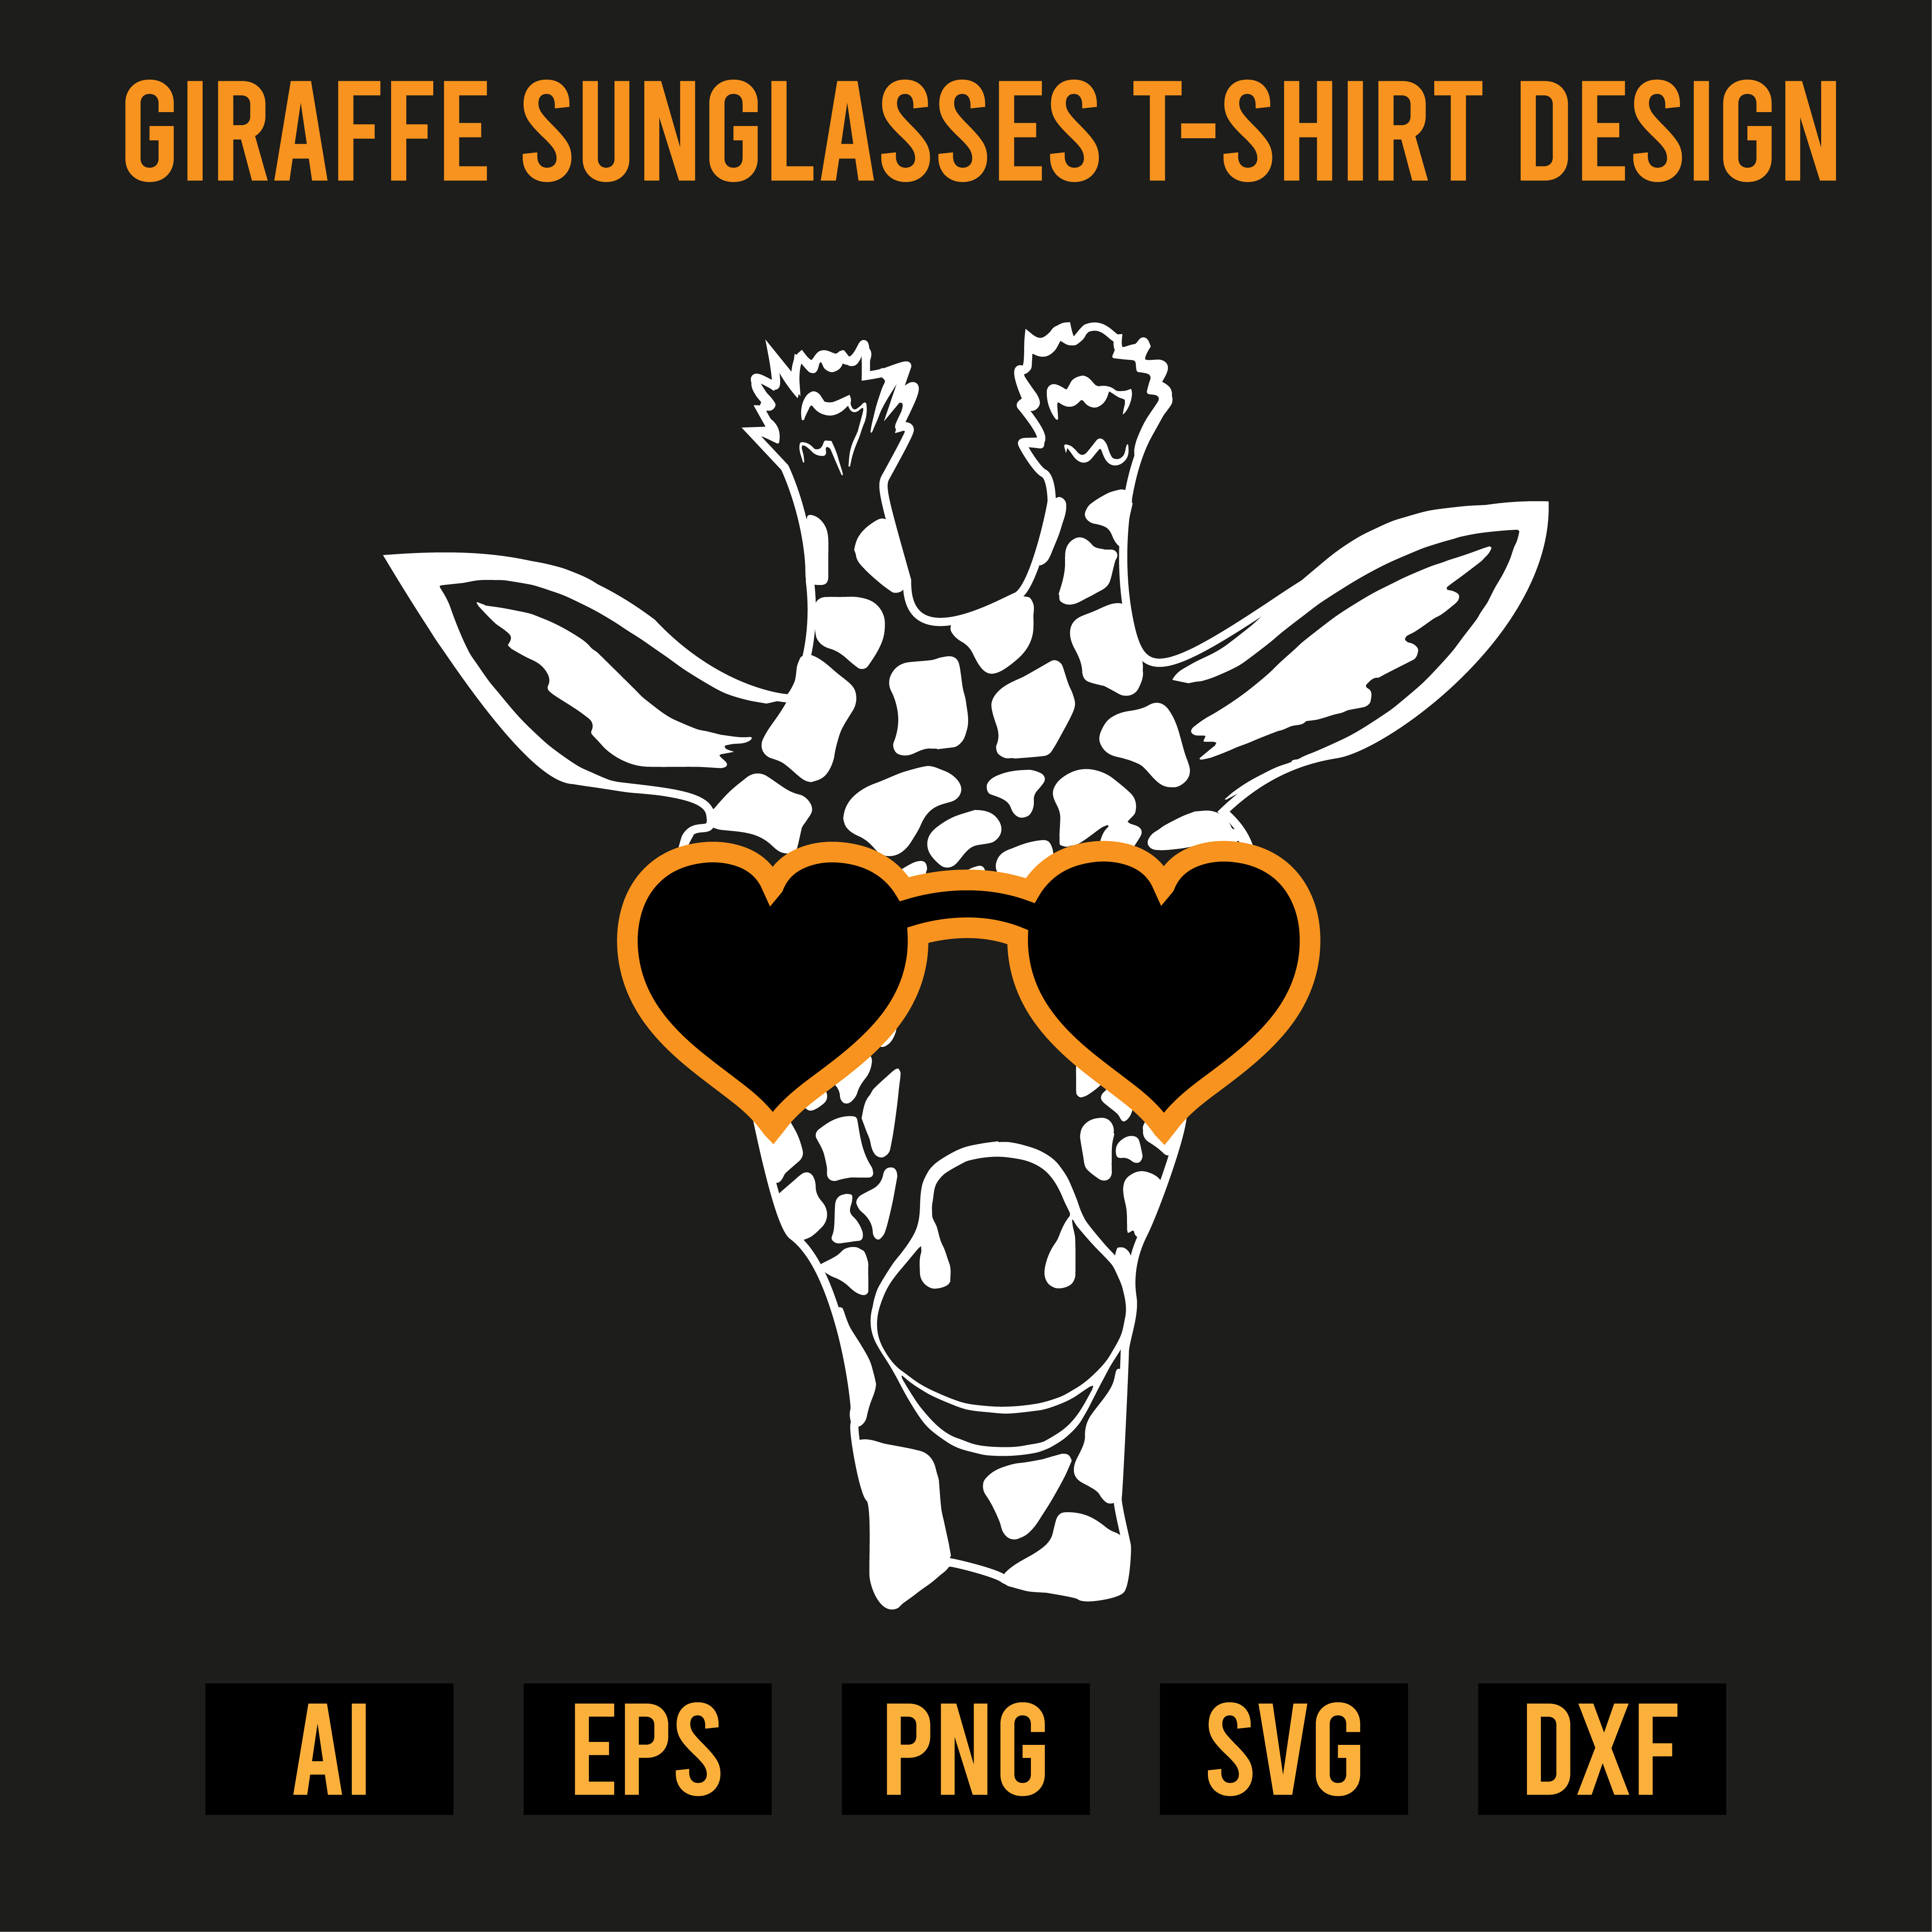 Giraffe Sunglasses T-Shirt Design preview image.